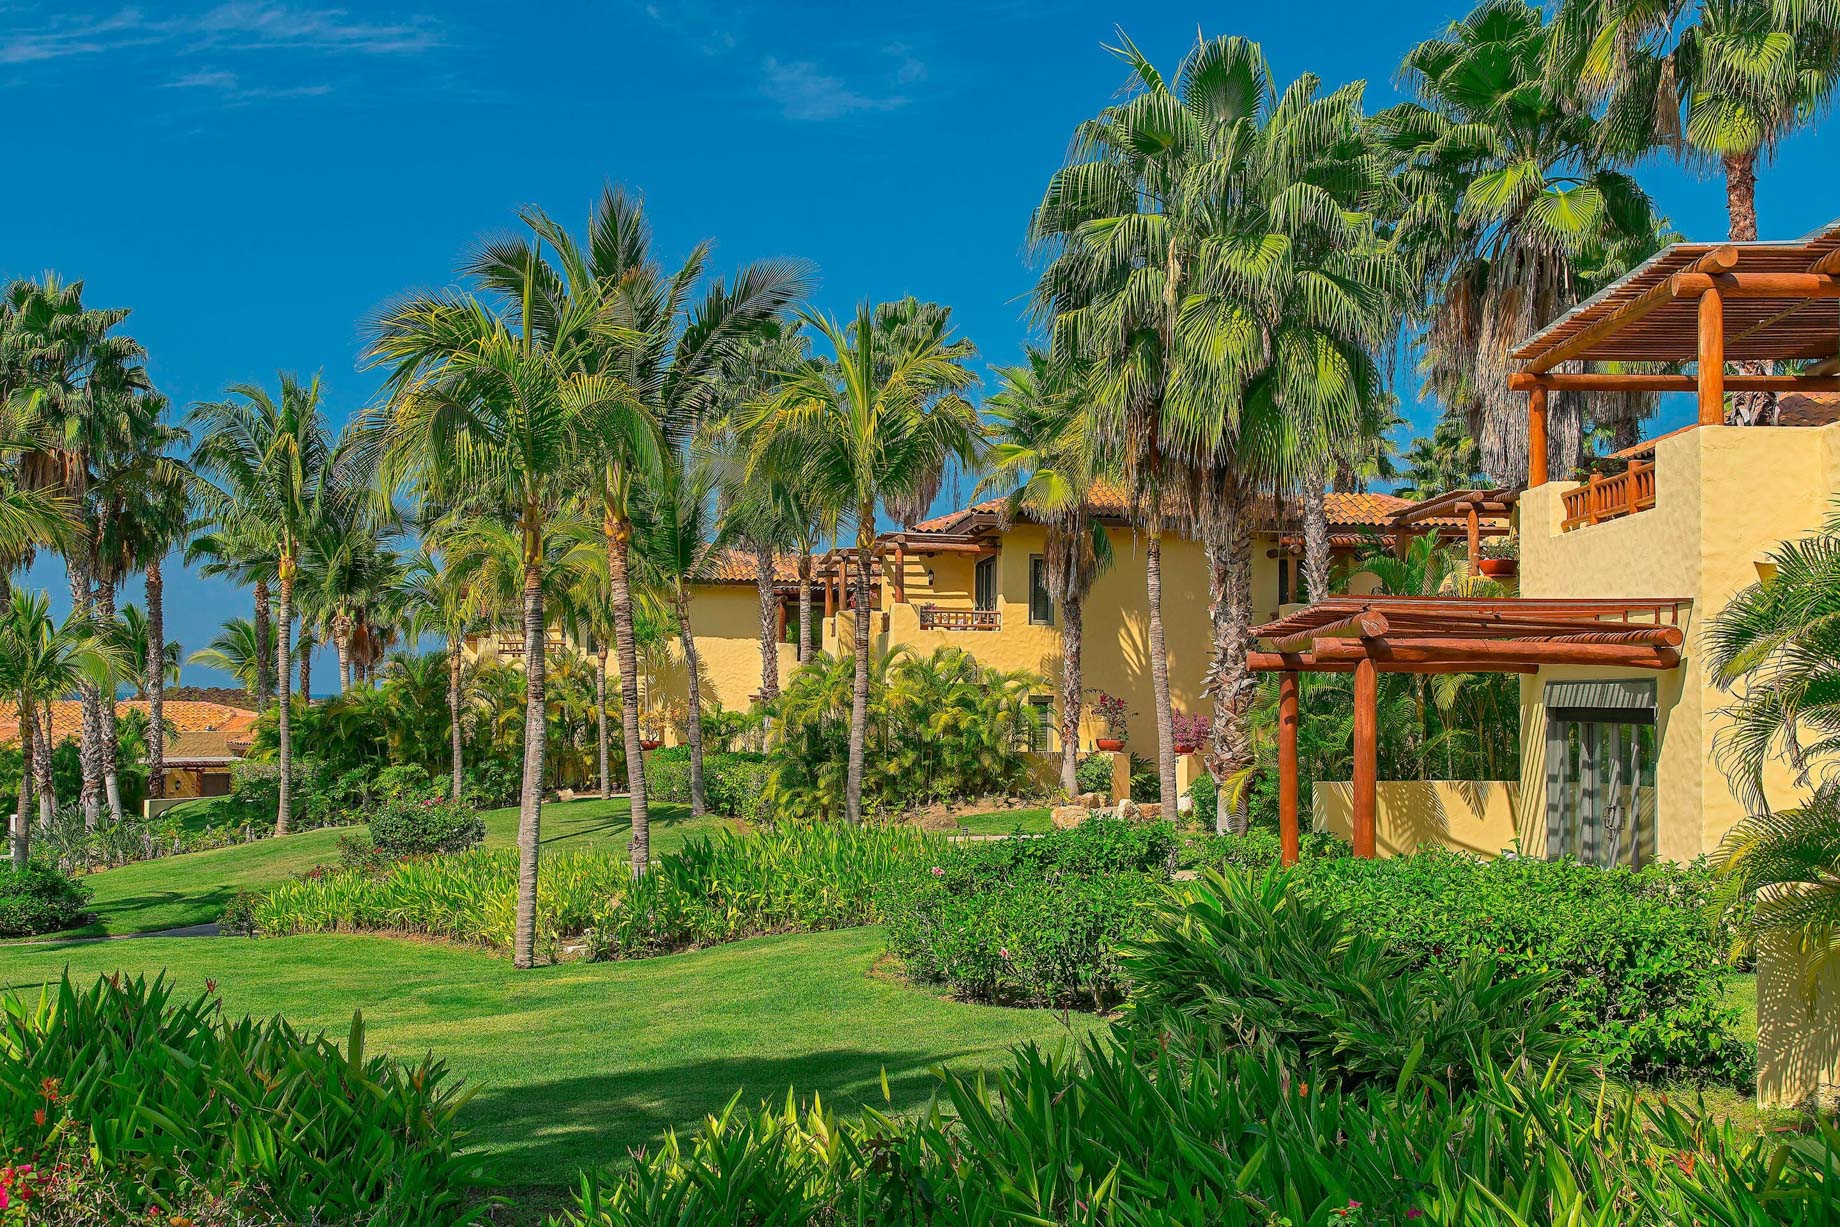 The St. Regis Punta Mita Resort - Nayarit, Mexico - Hotel Grounds View